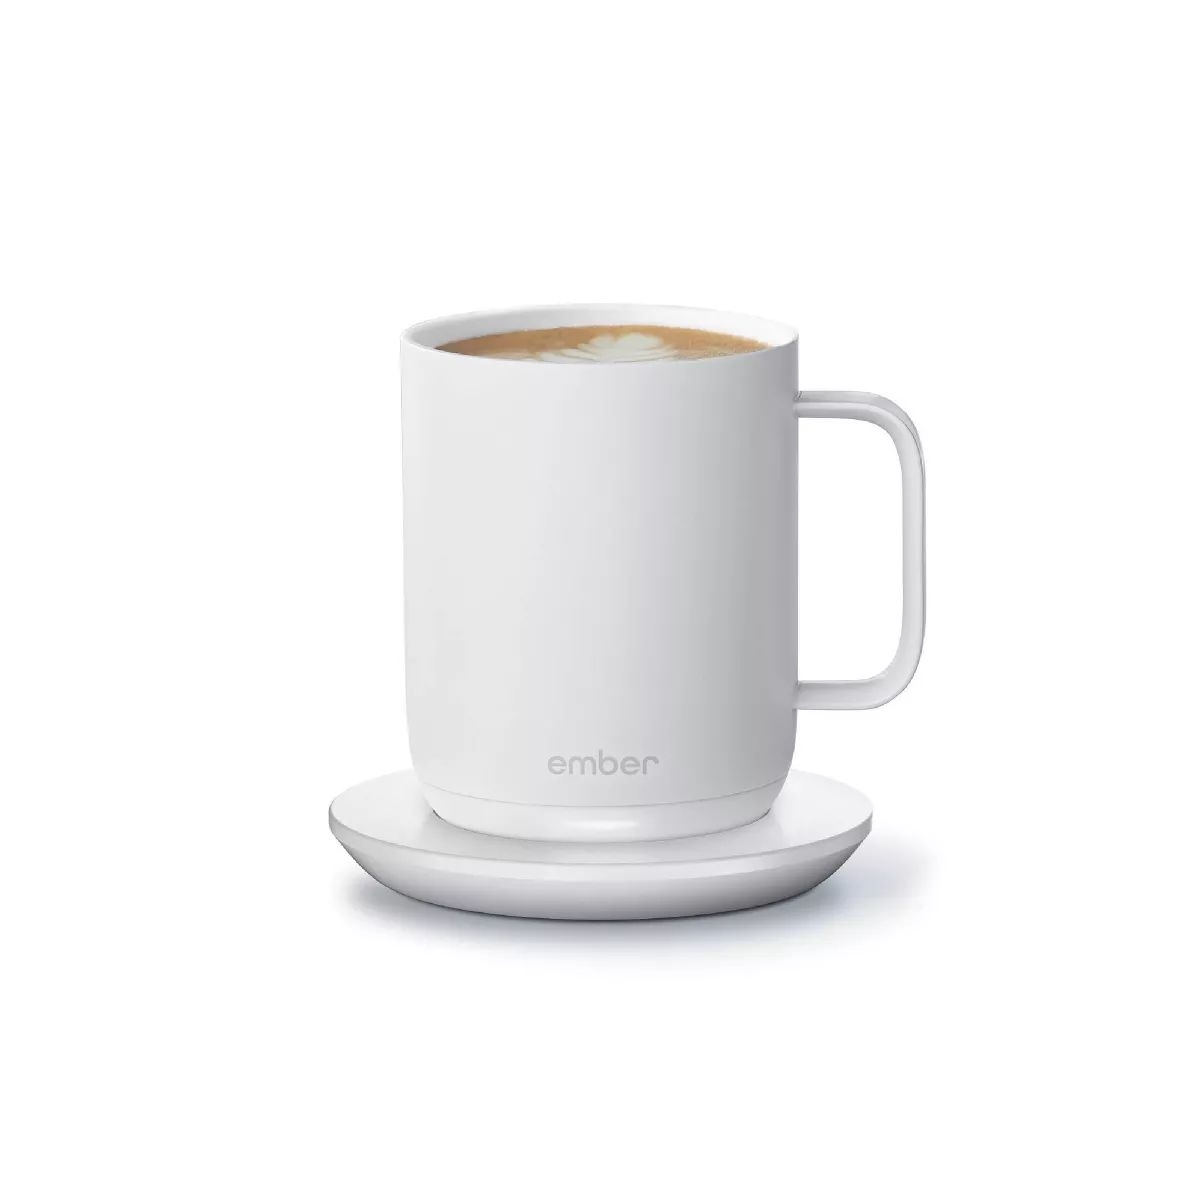 Ember Mug² 10oz Temperature Control Smart Mug - White | Target